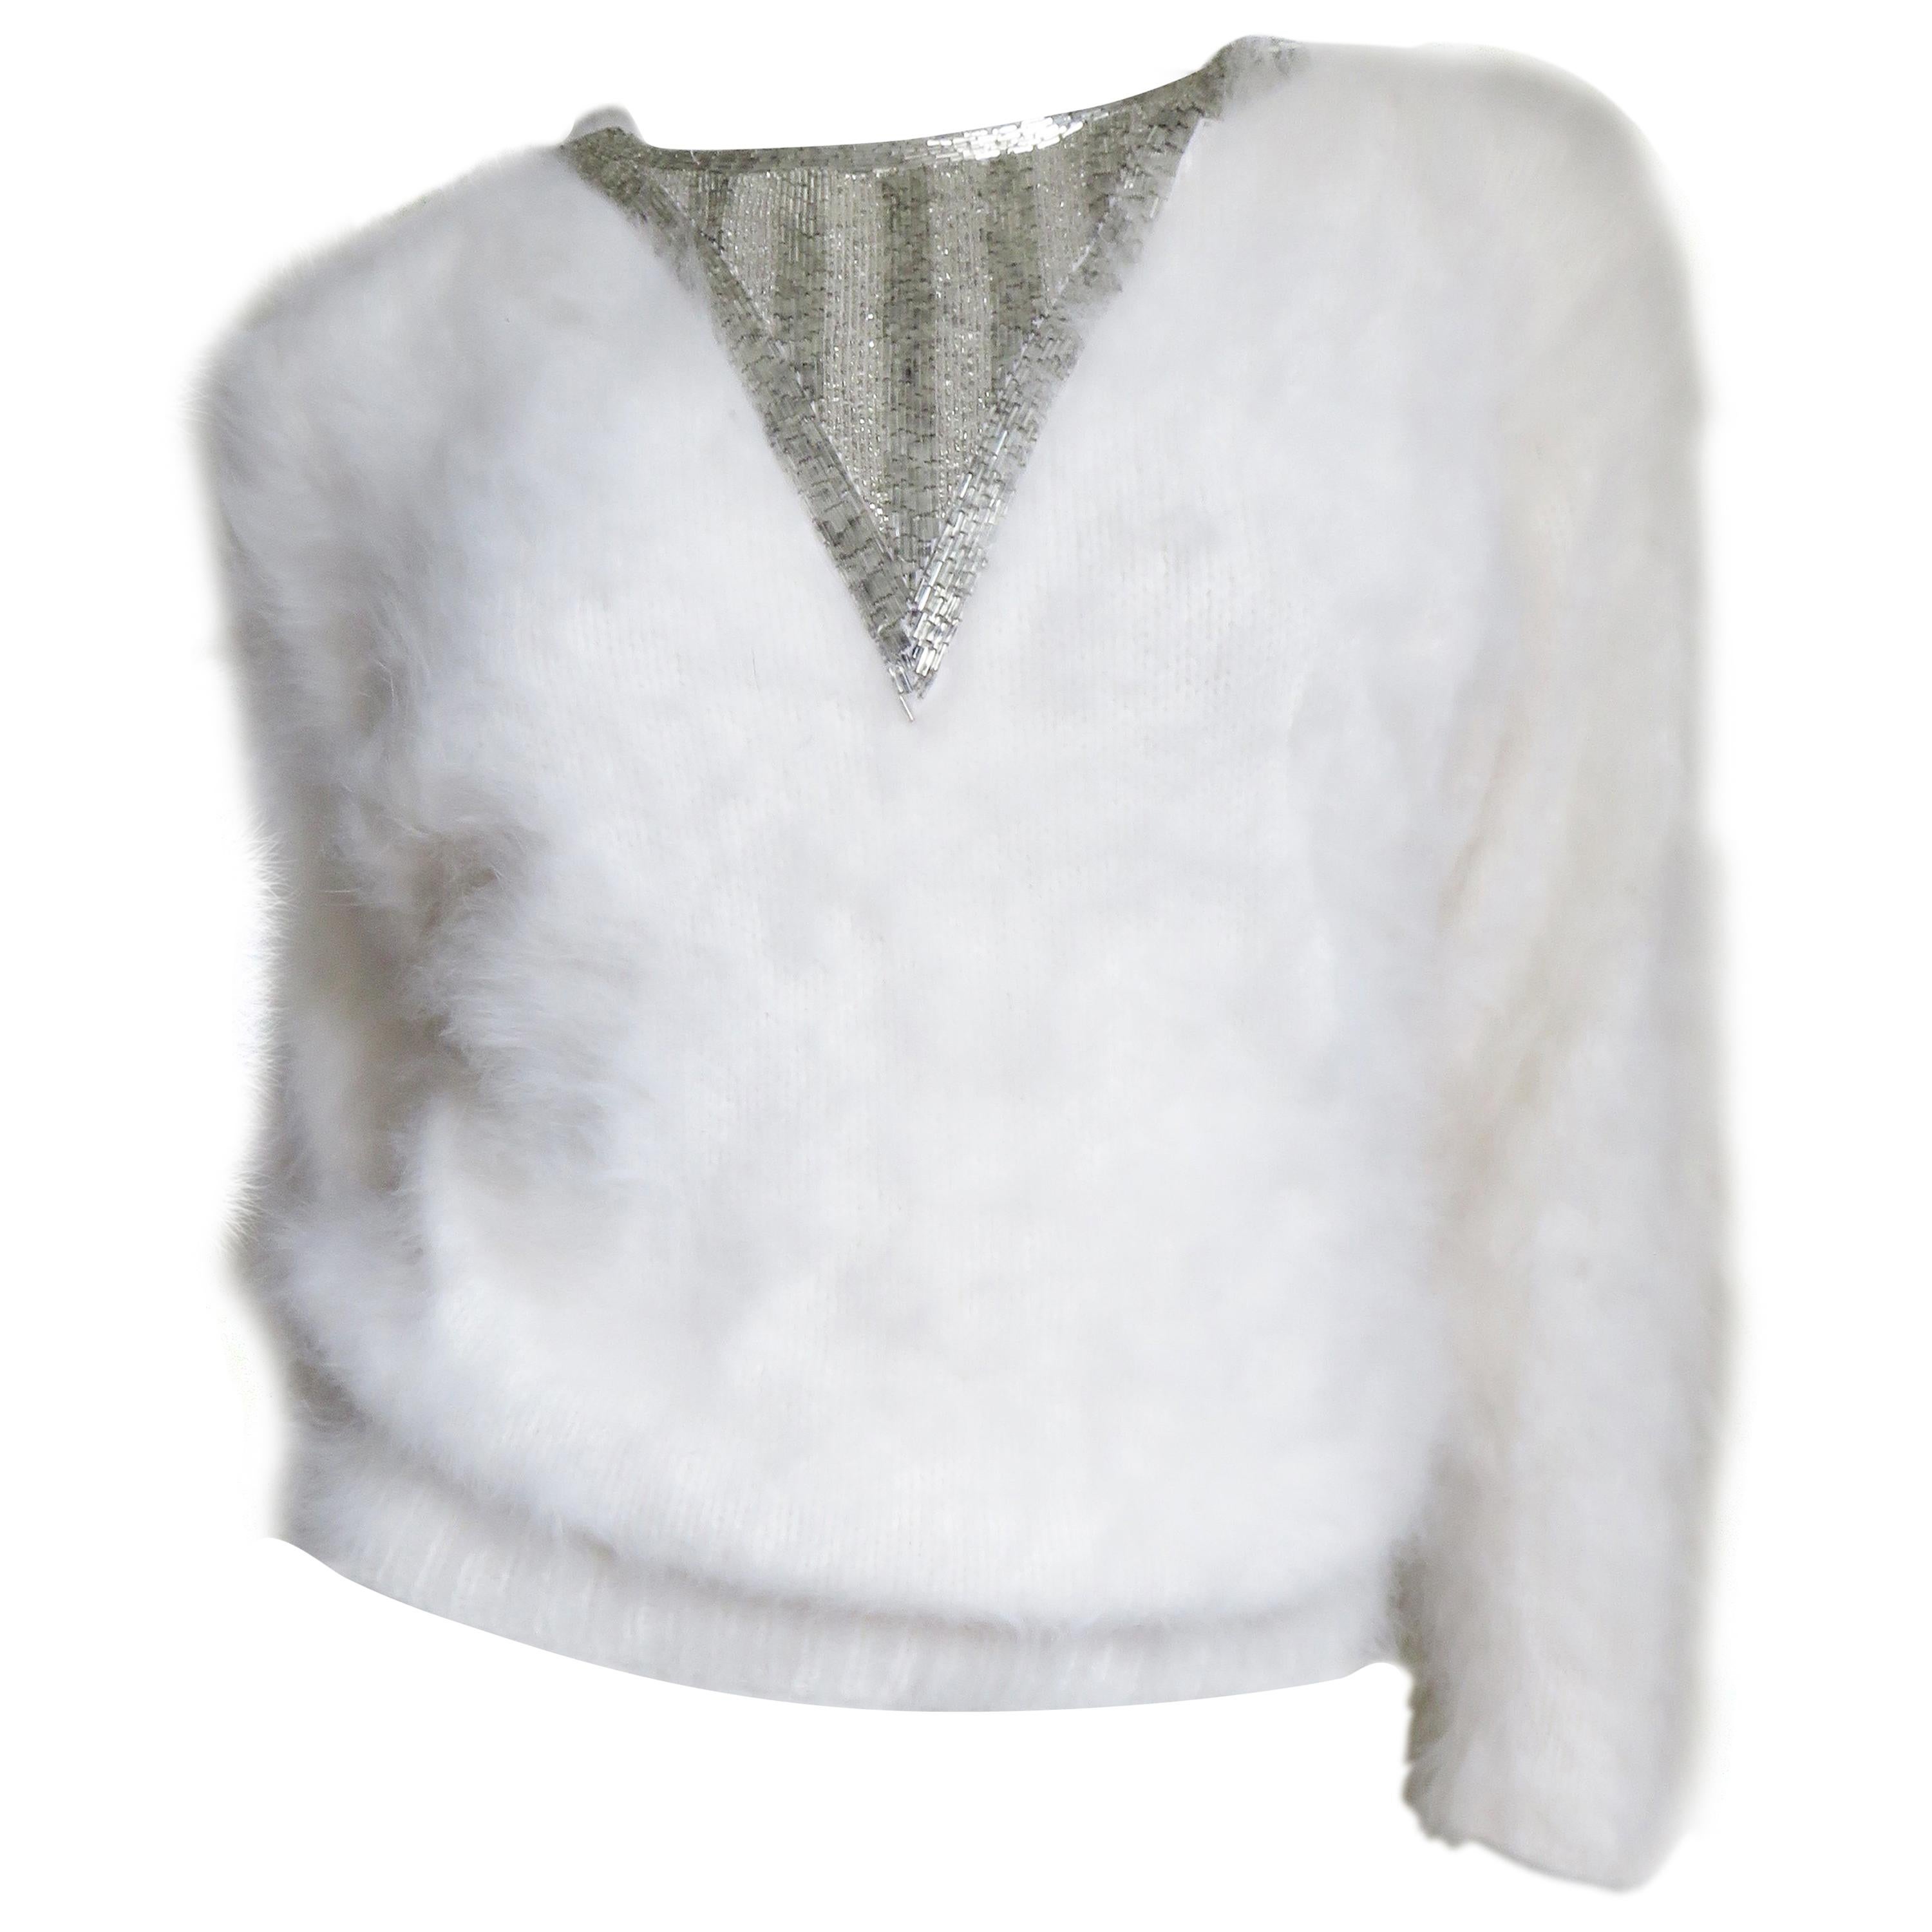 New Vintage 1980s J. Orr White Angora Sweater